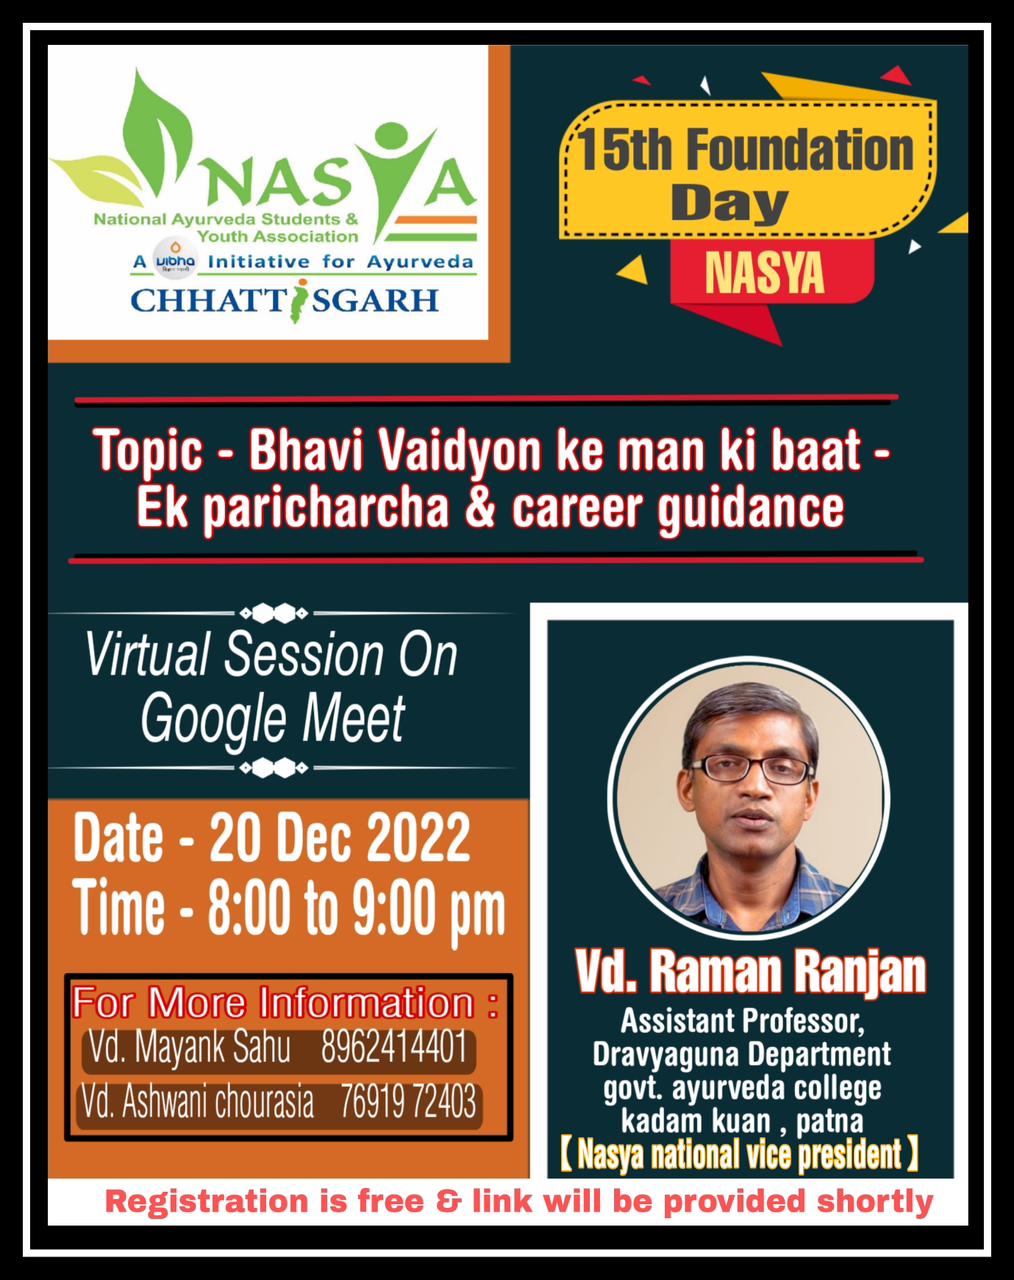 Event - NASYA's 15th Foundation Day Chhattisgarh State